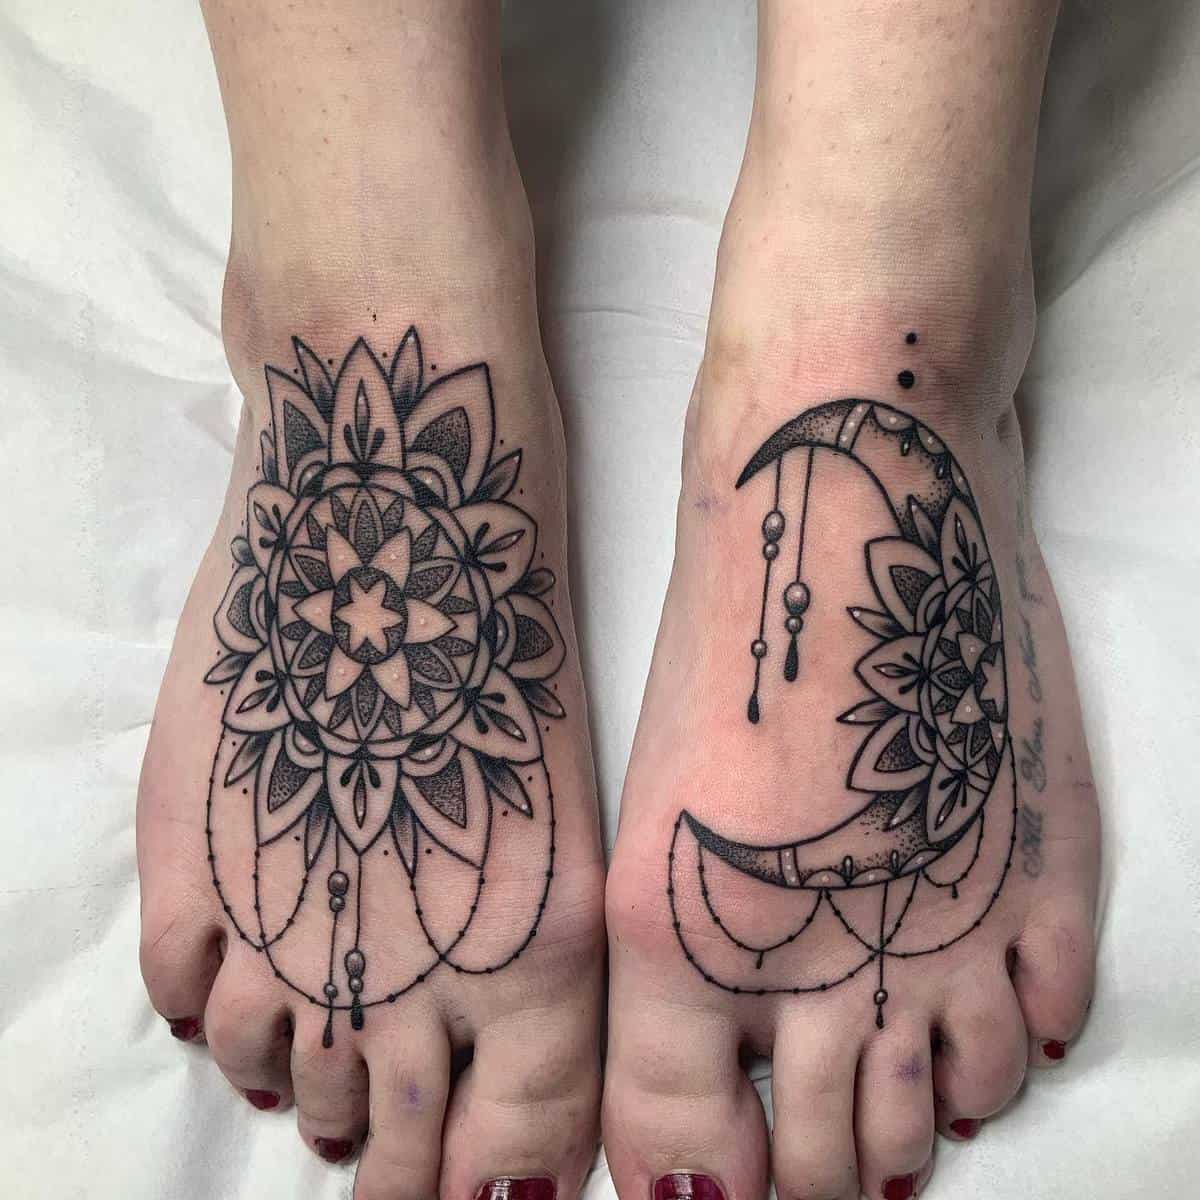 Foot Mandala Tattoos blacksailstattoostudio